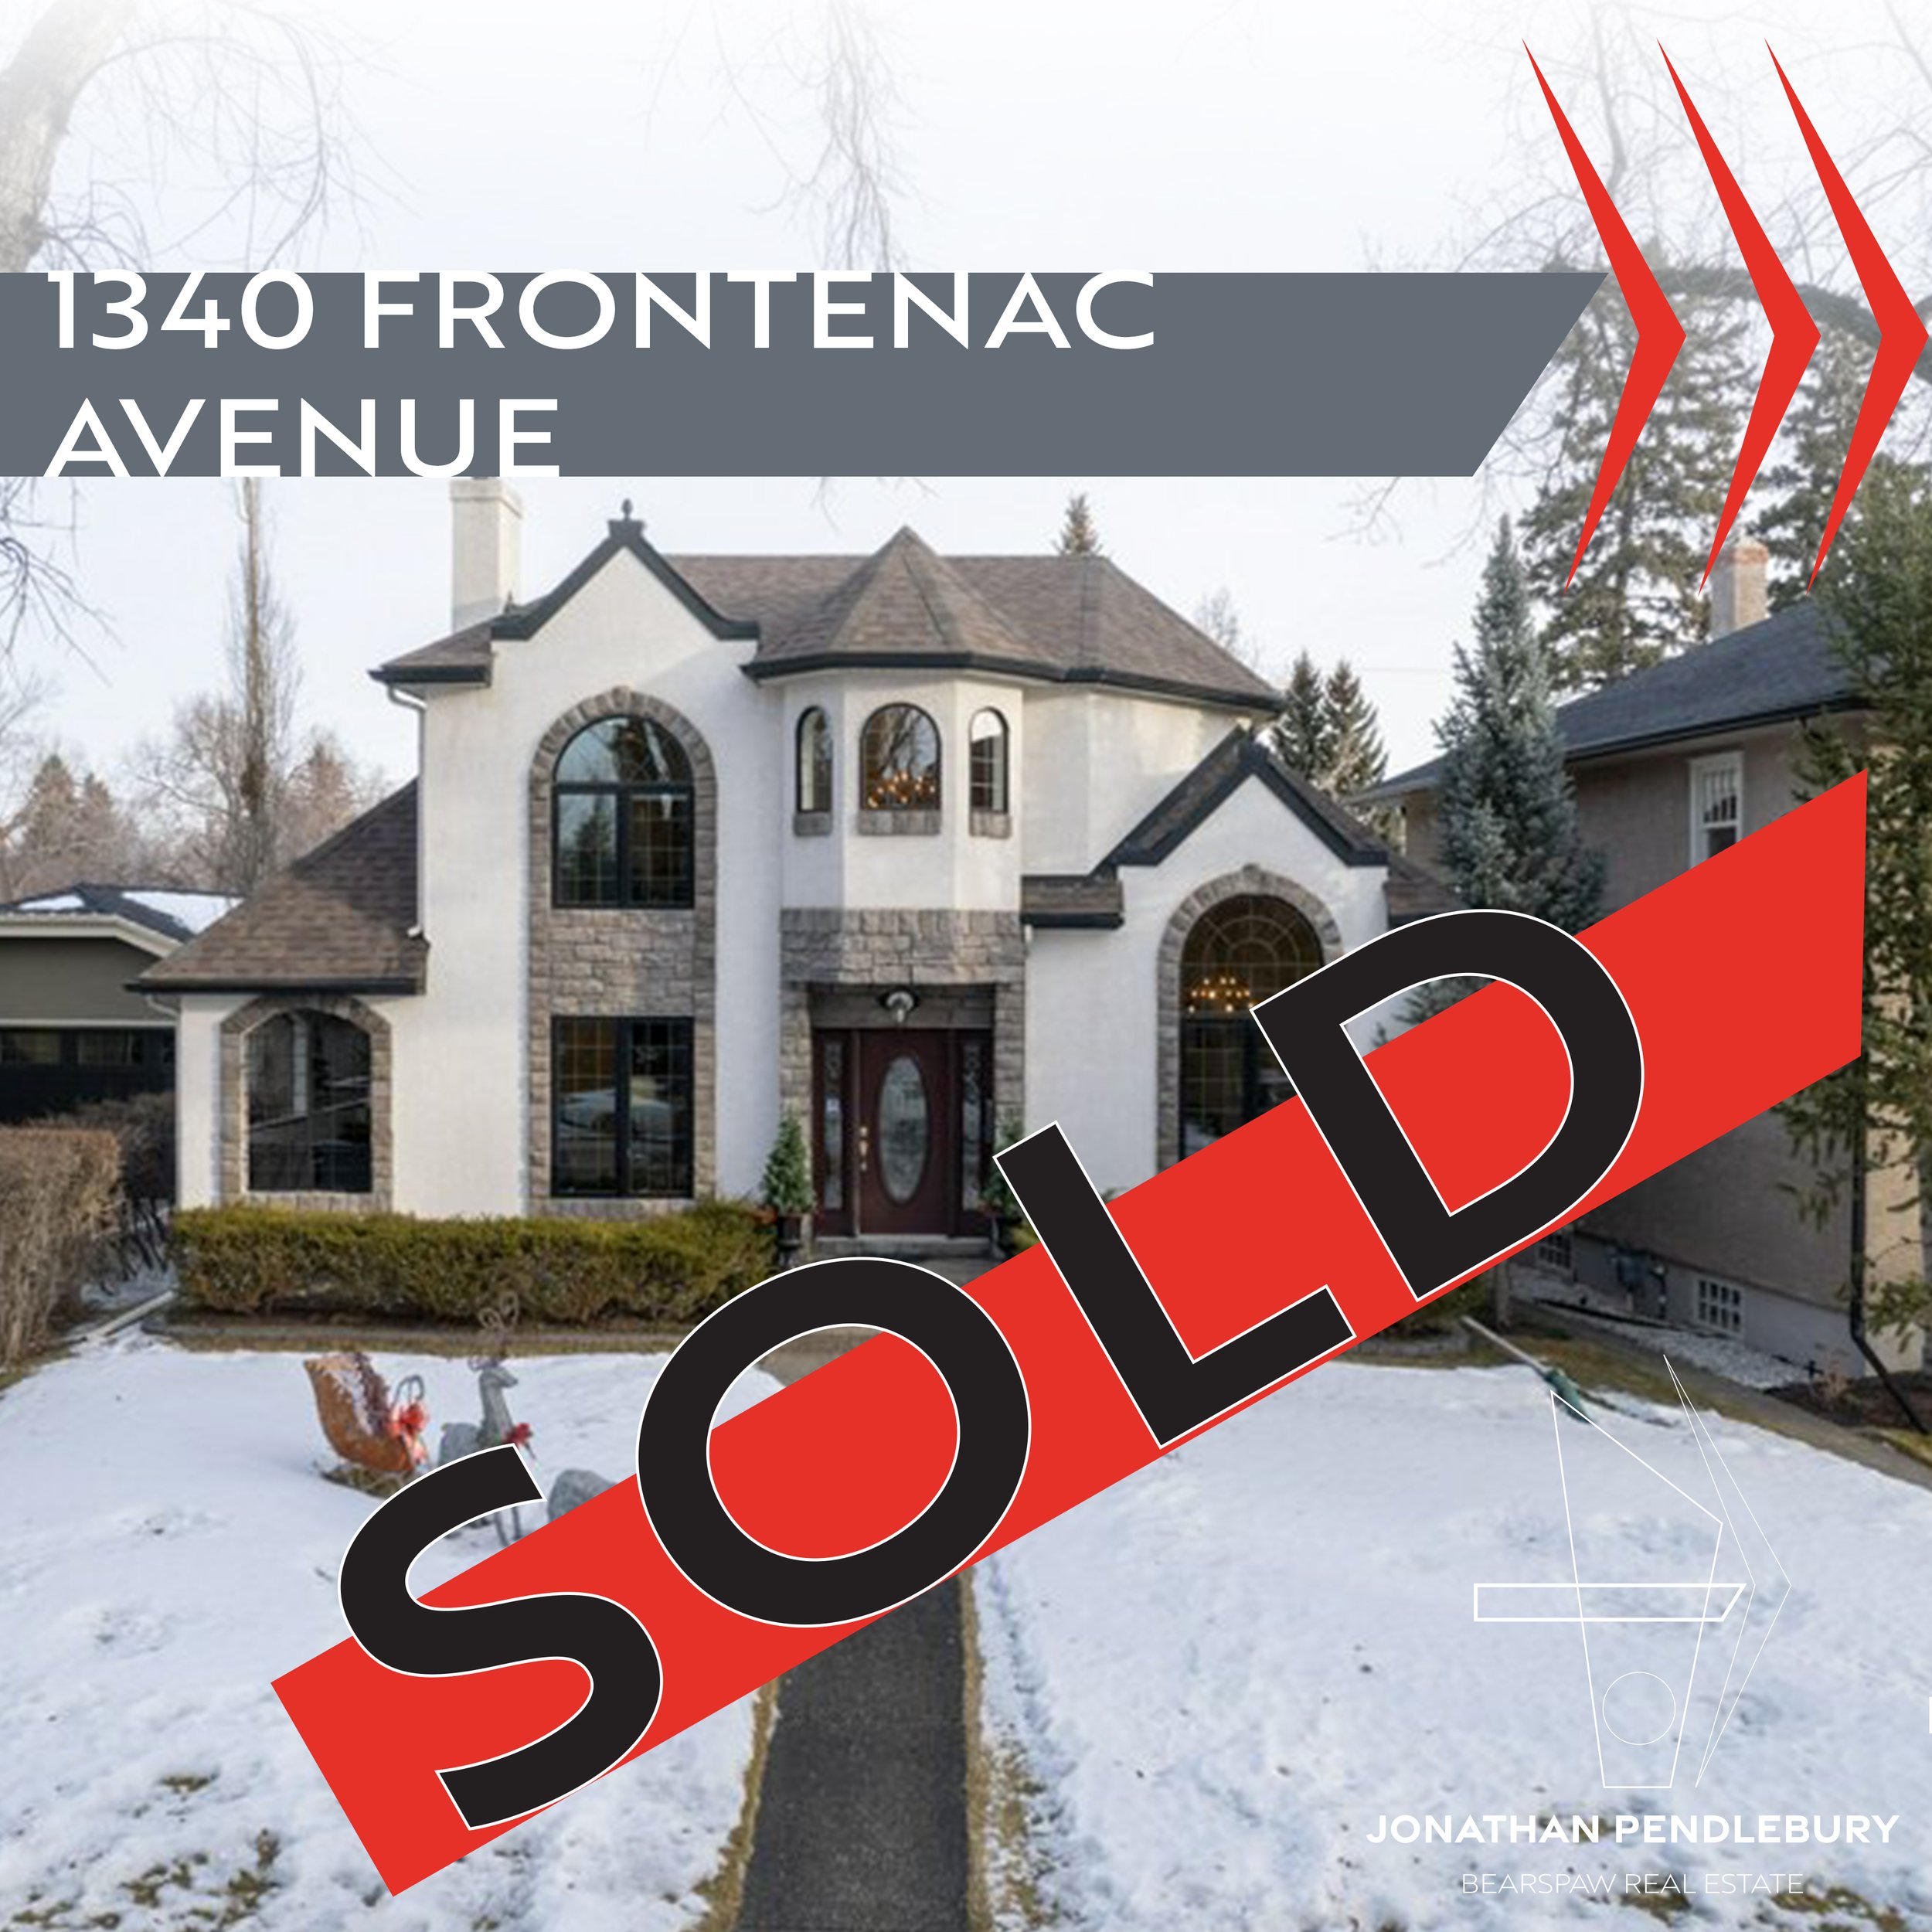 1340 Frontenac Avenue_sold.jpg